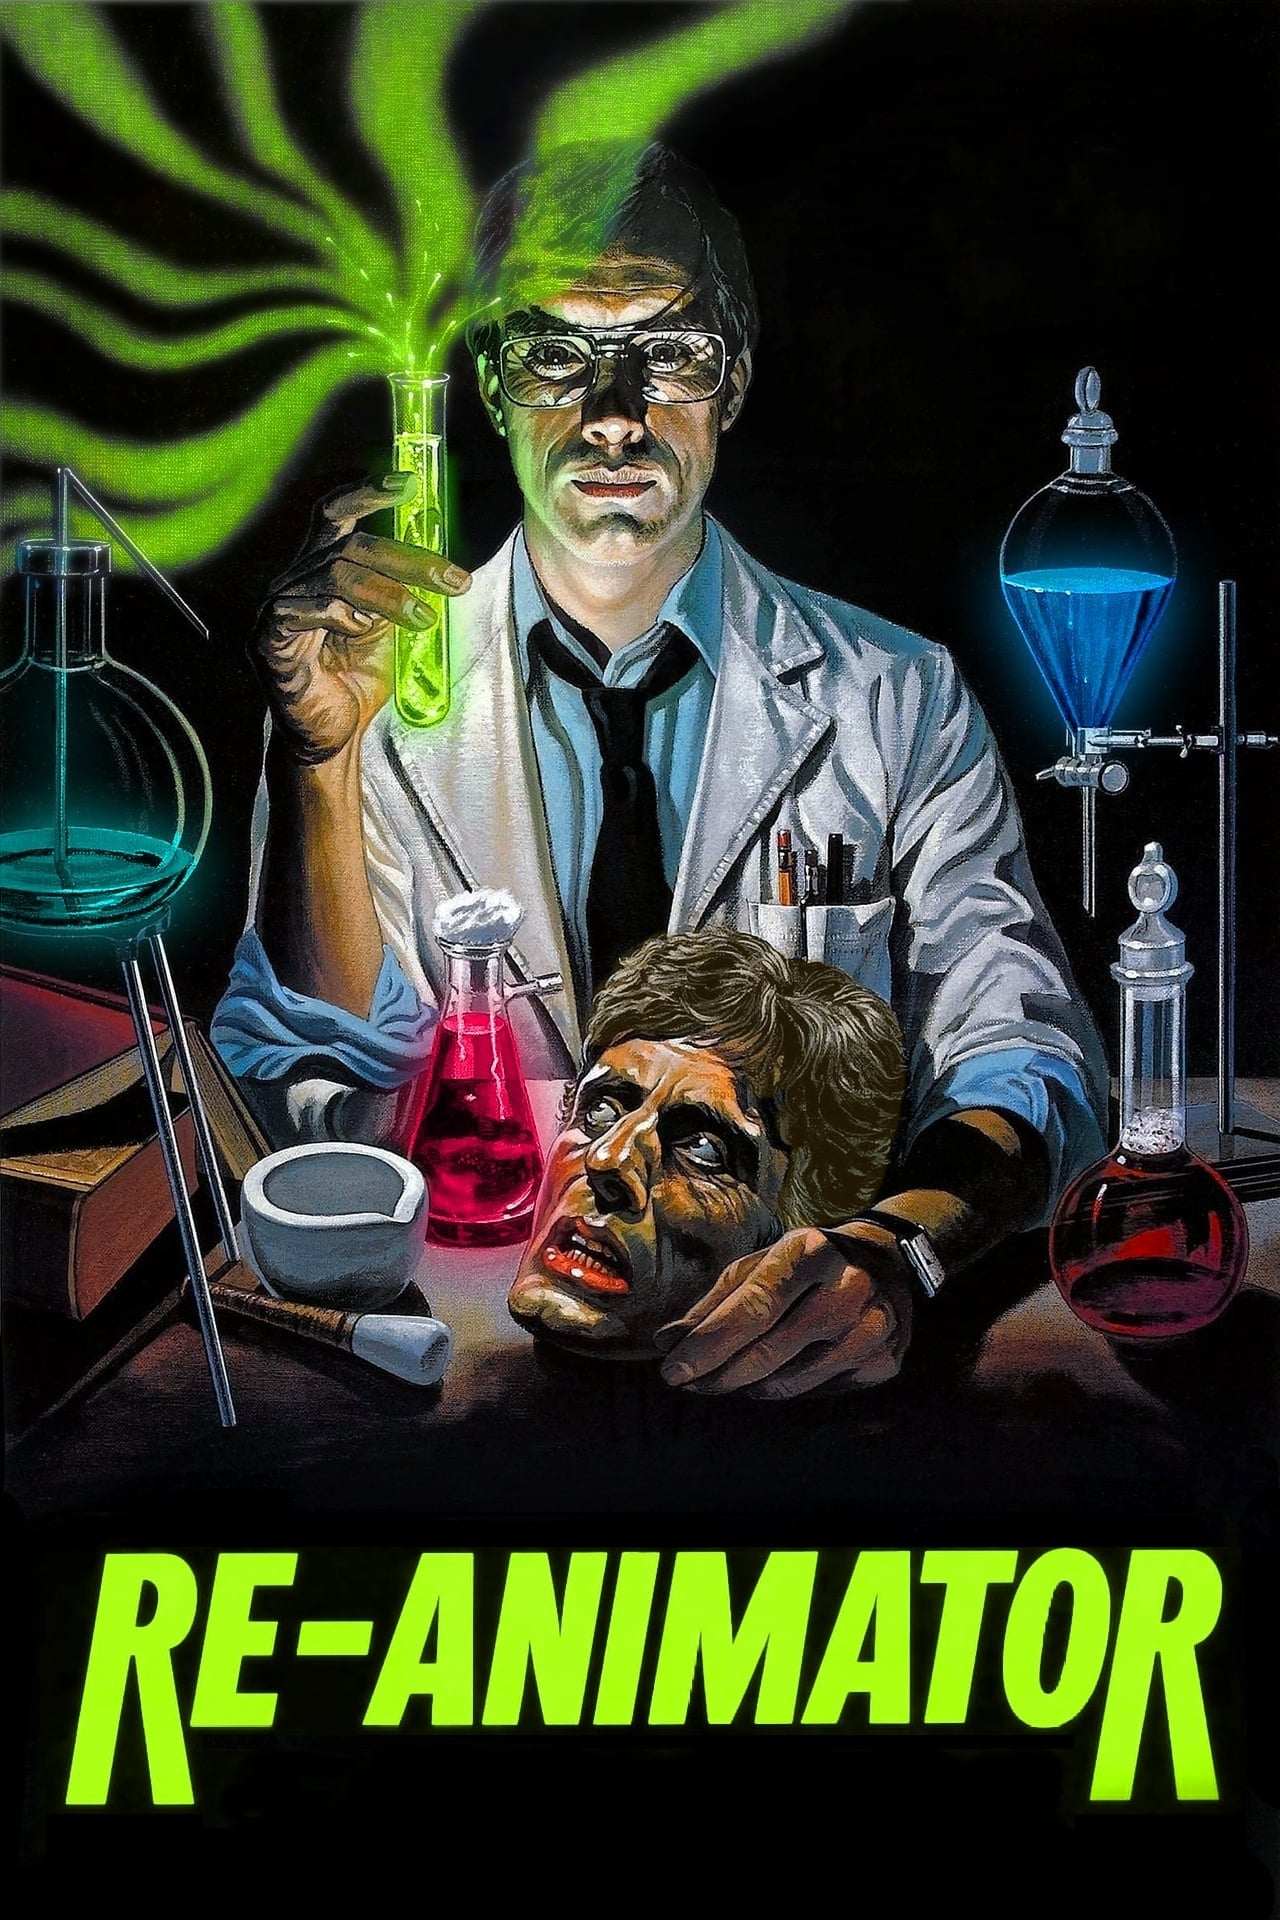 Re-Animator [HD] (1985)